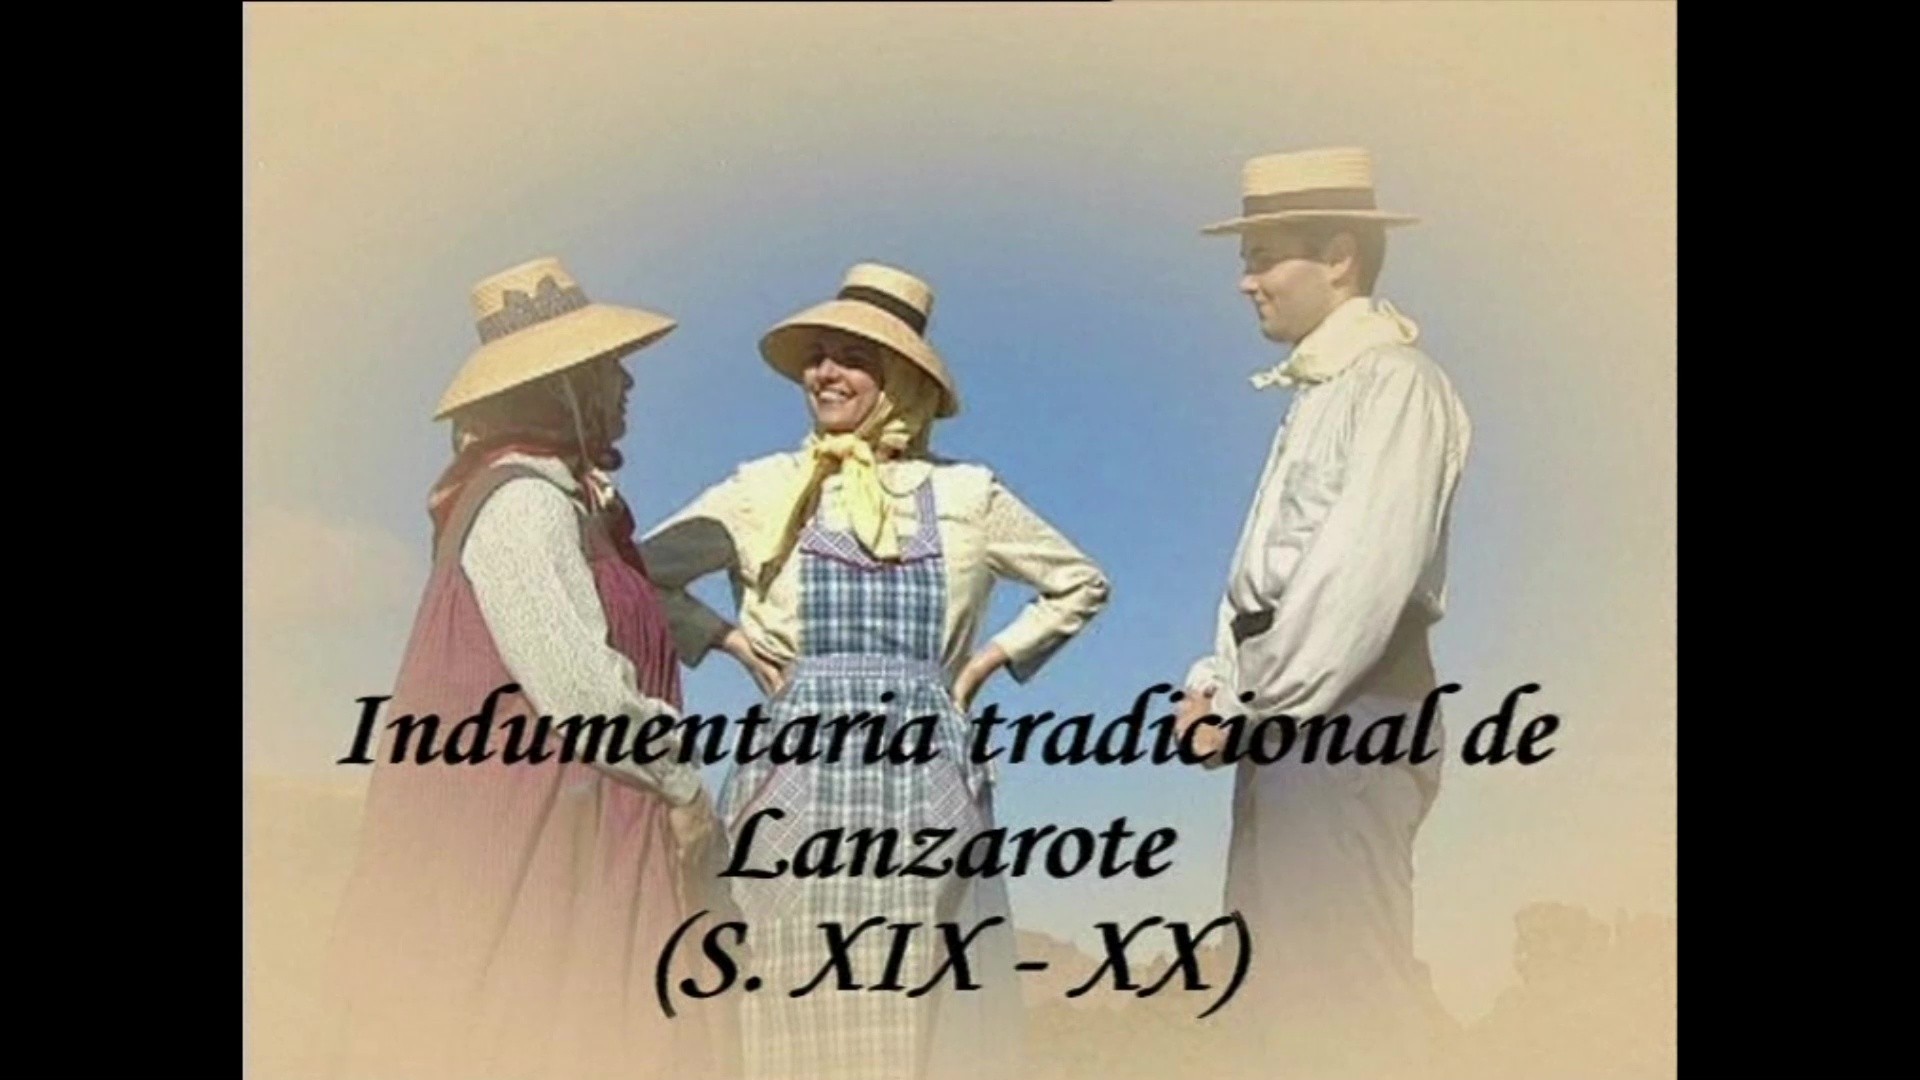 Indumentaria tradicional de Lanzarote S. XIX - S. XX (2006)